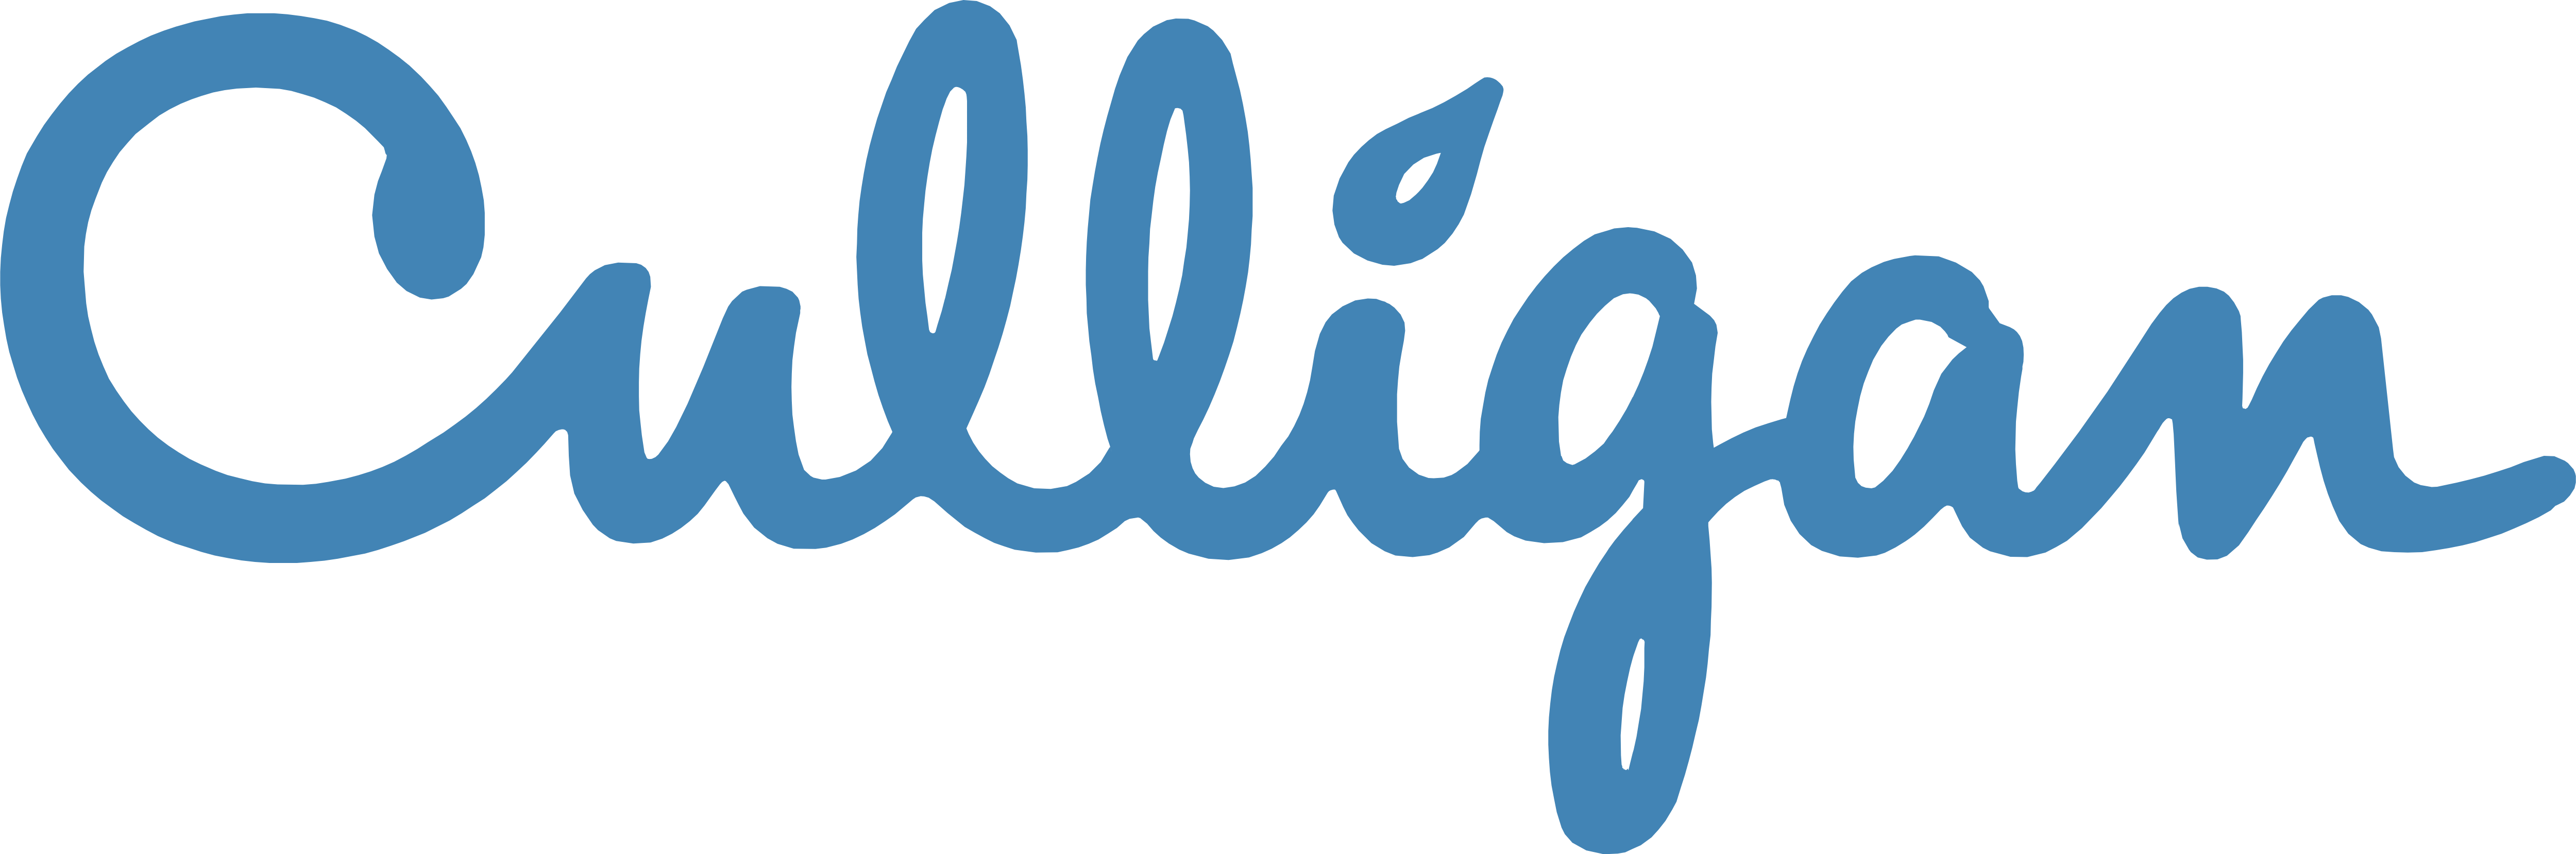 Culligan – Logos Download